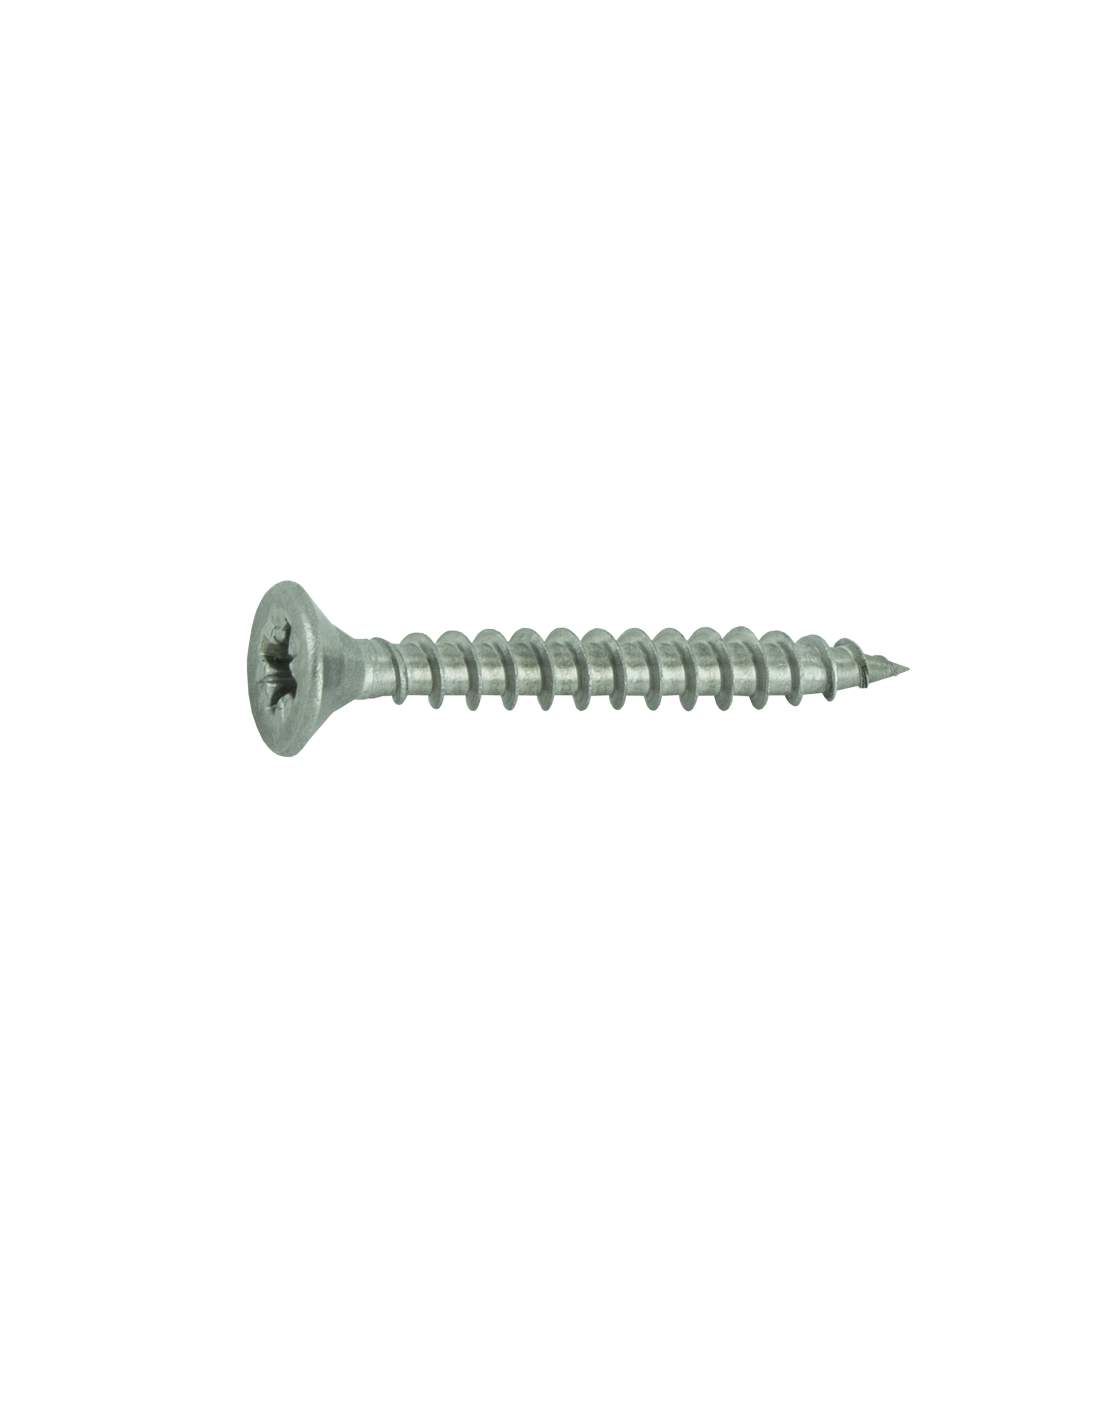 Pozidriv stainless steel A2 4x50 countersunk screws, 18 pcs.